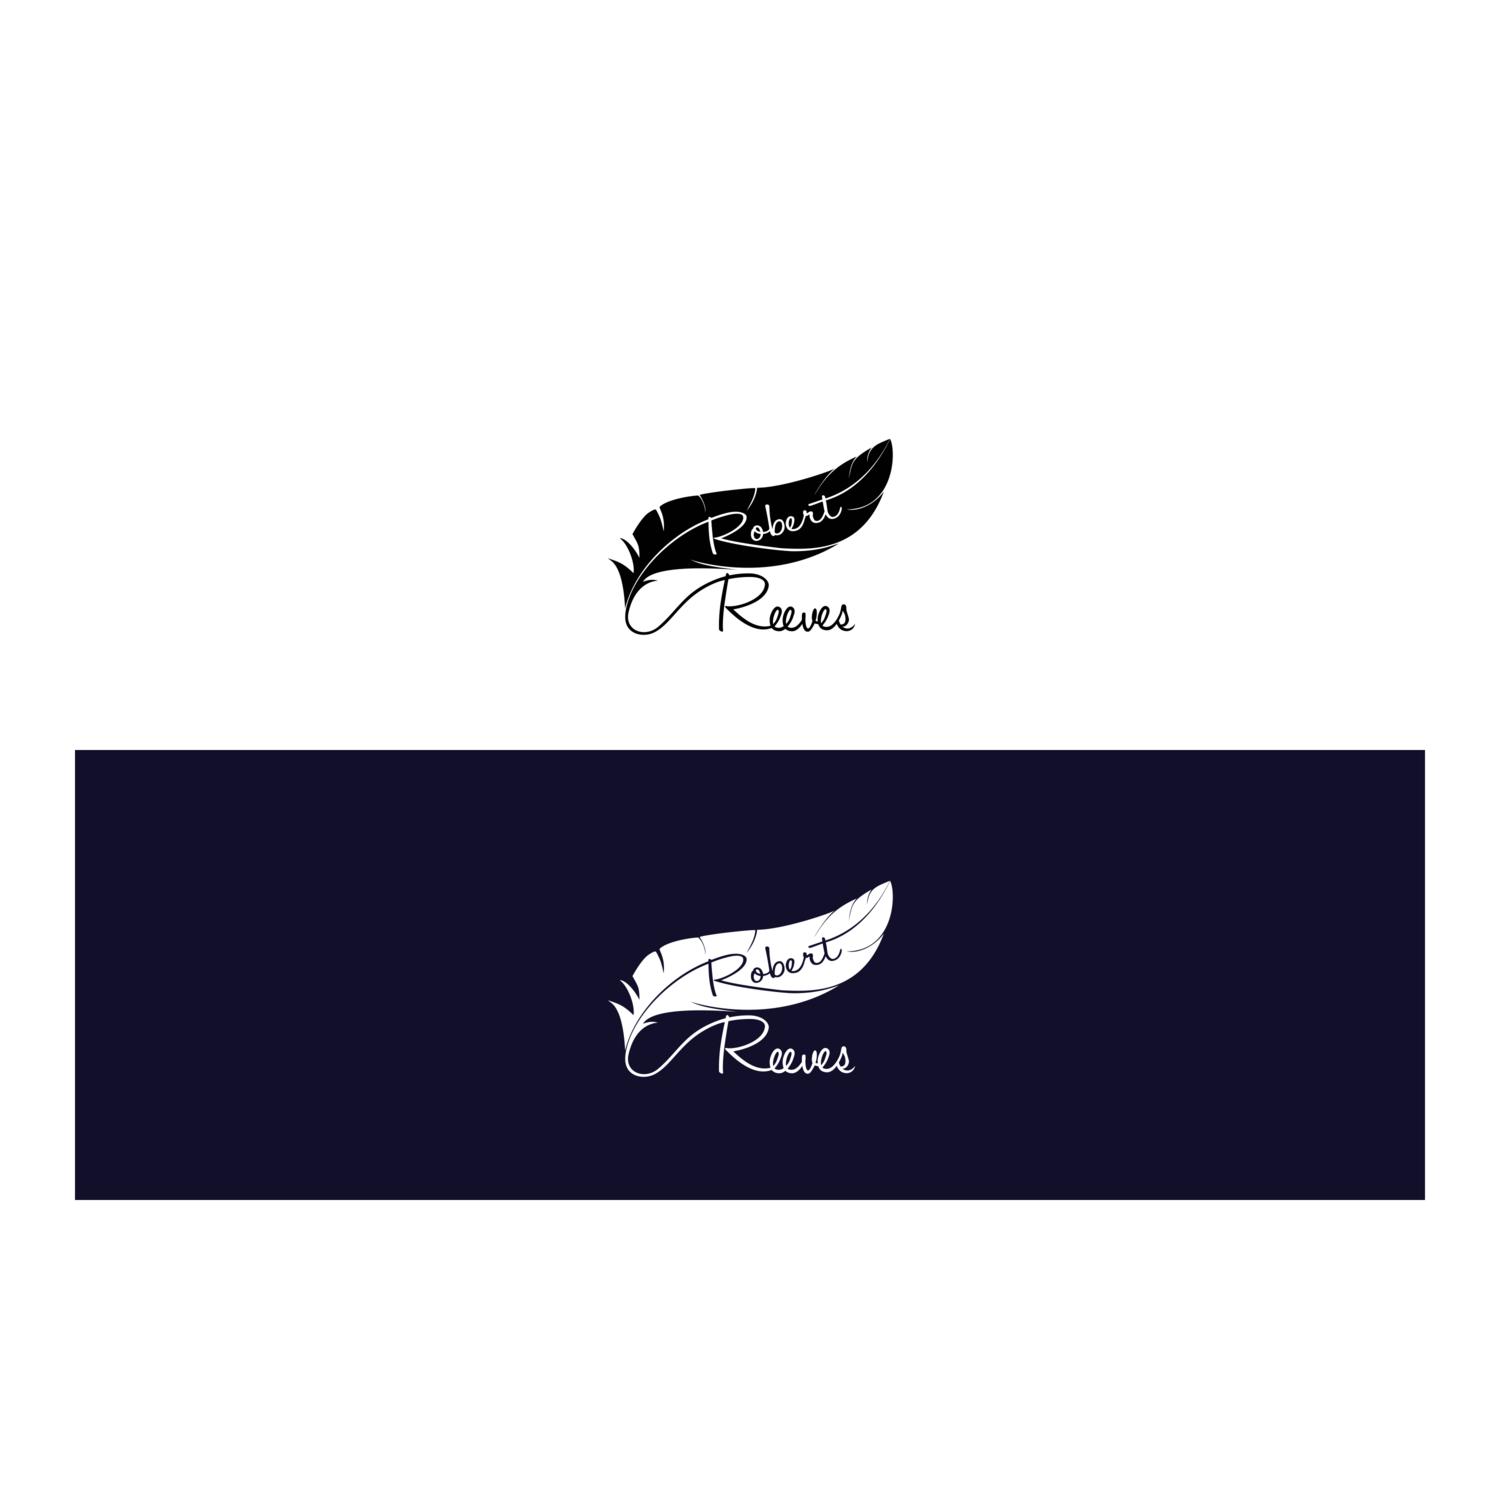 Typographic Logo - Professional Typographic Logo Design by asfai on Envato Studio